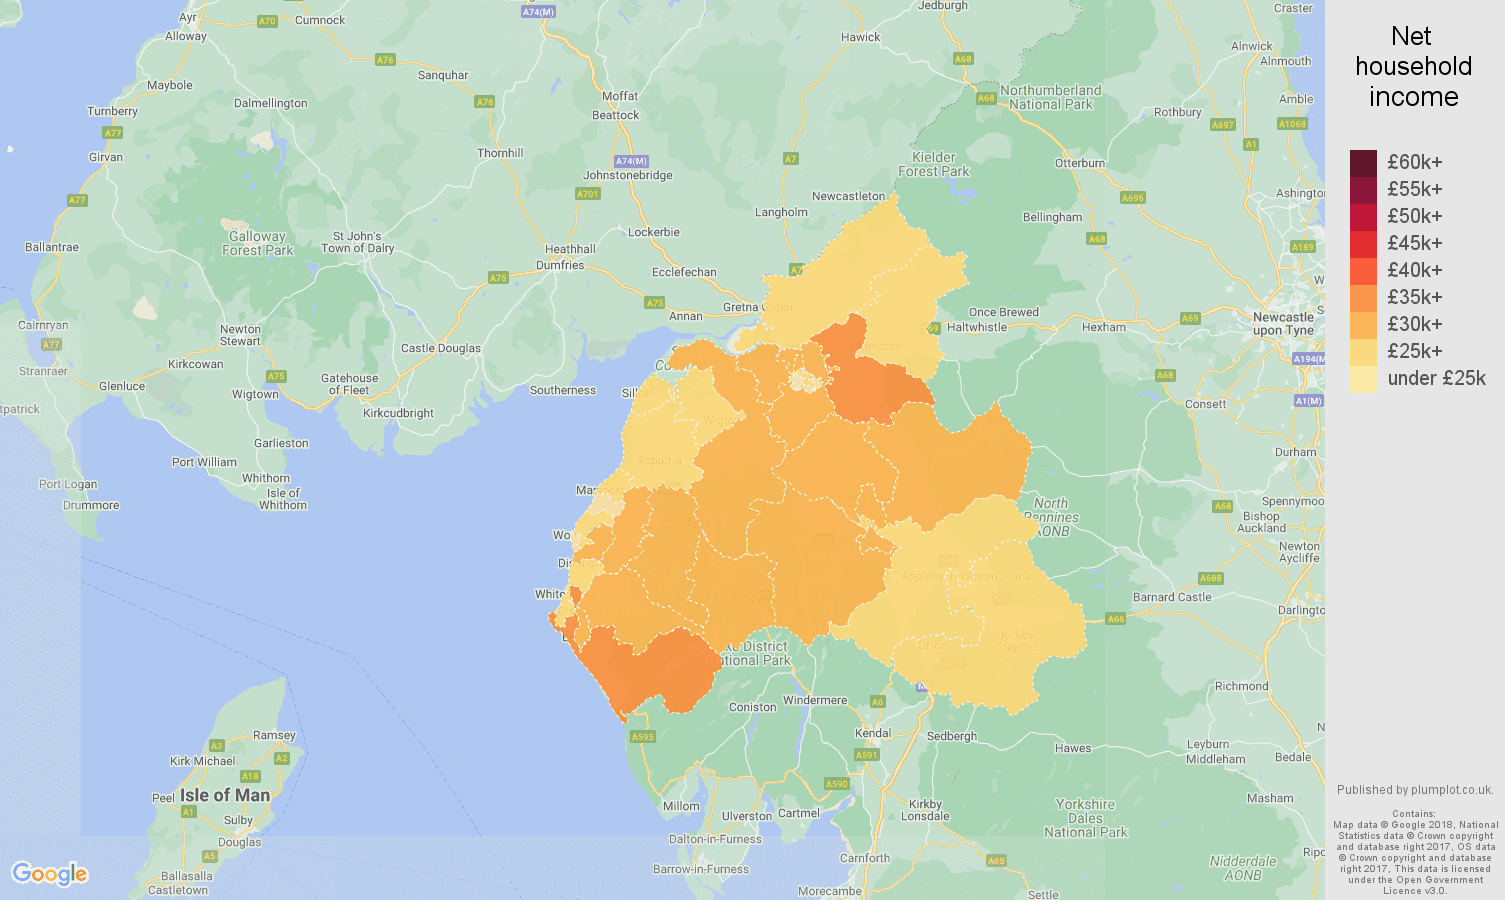 Carlisle net household income map